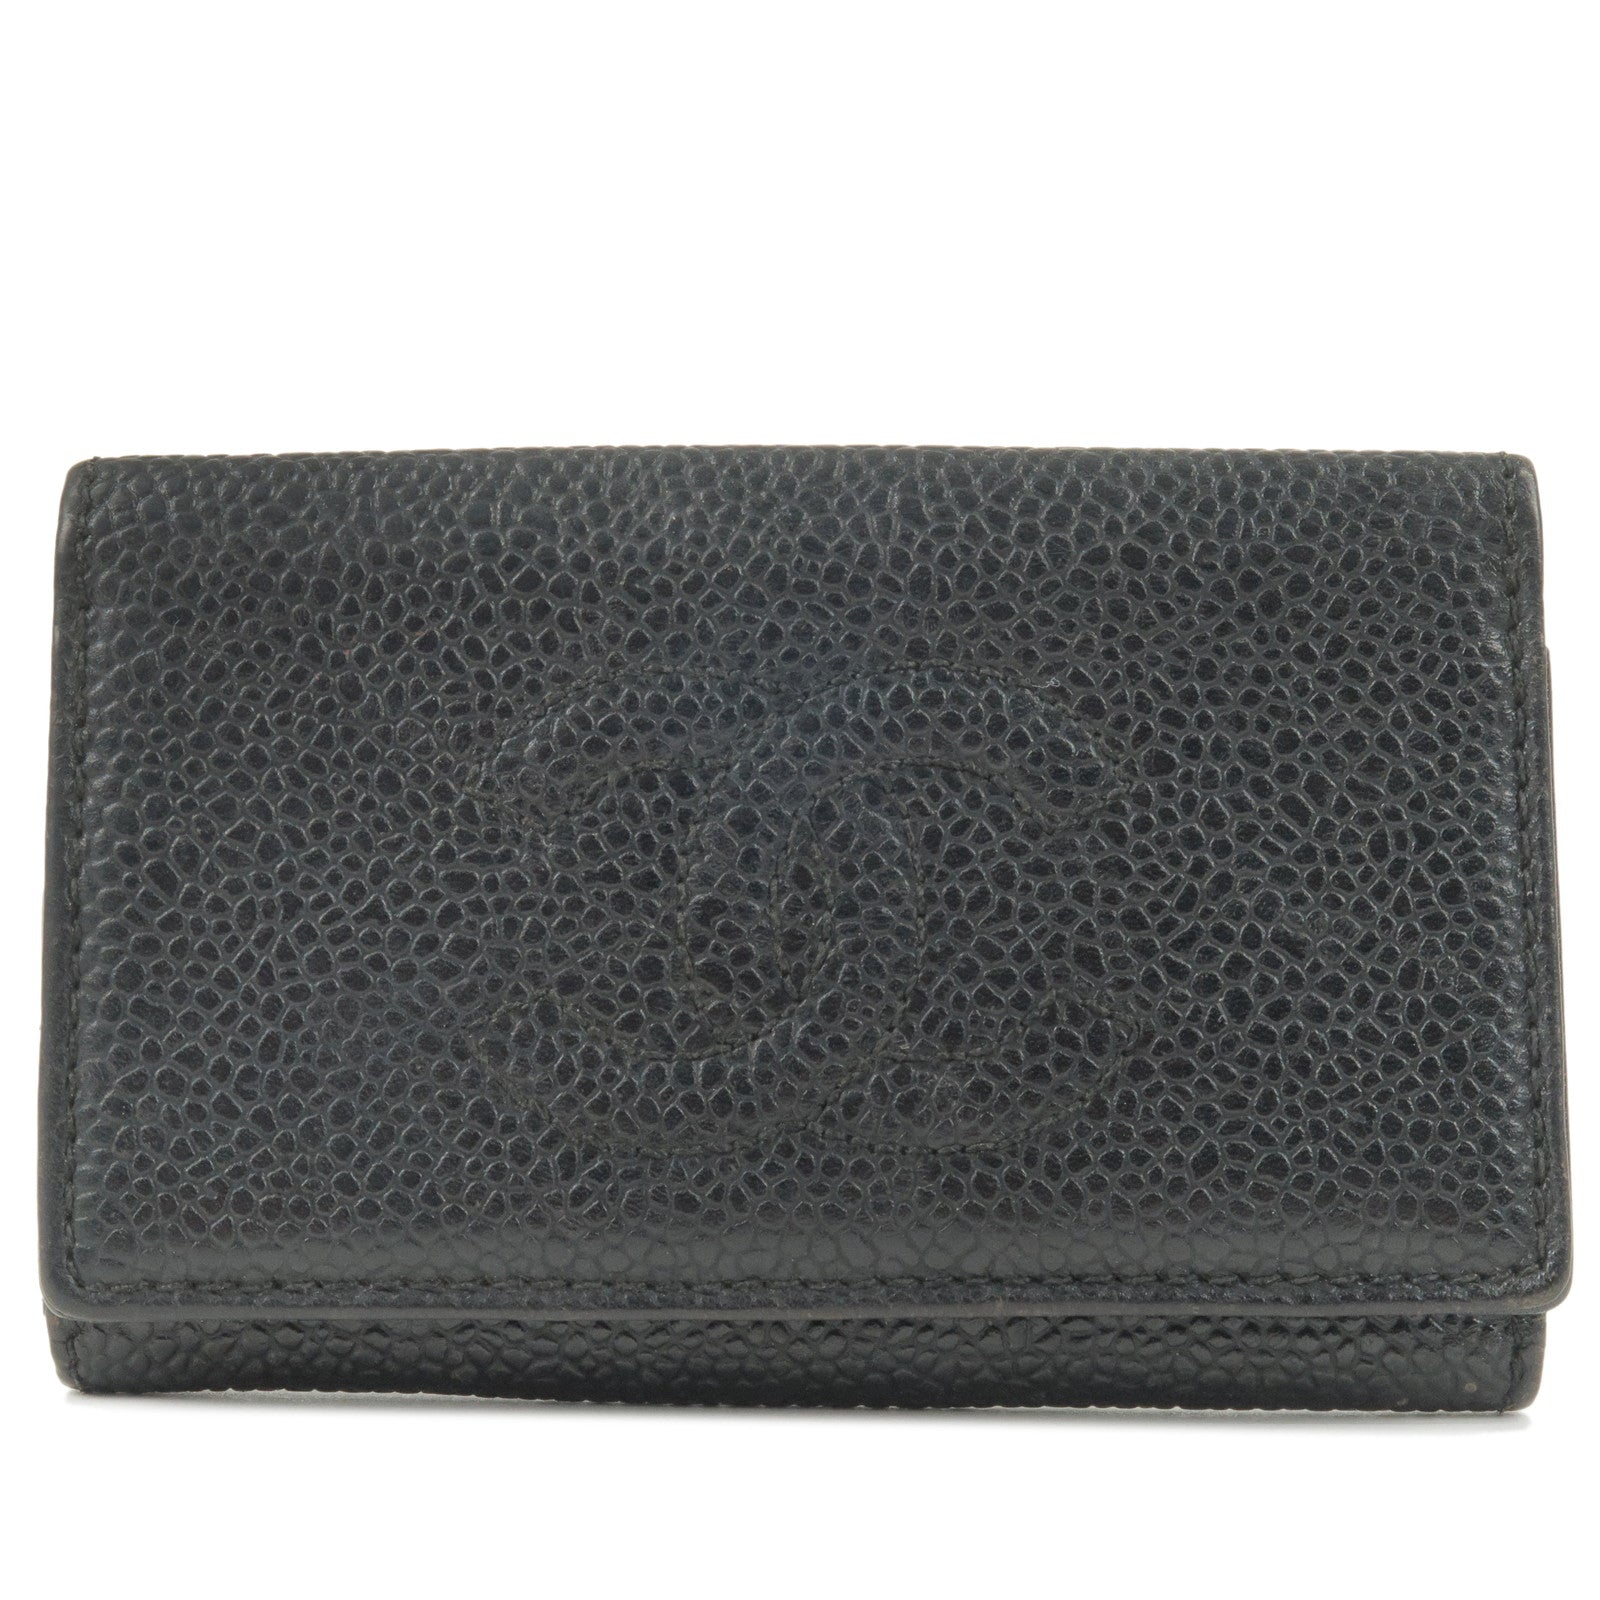  Chanel, Pre-Loved Black Caviar Compact Wallet, Black